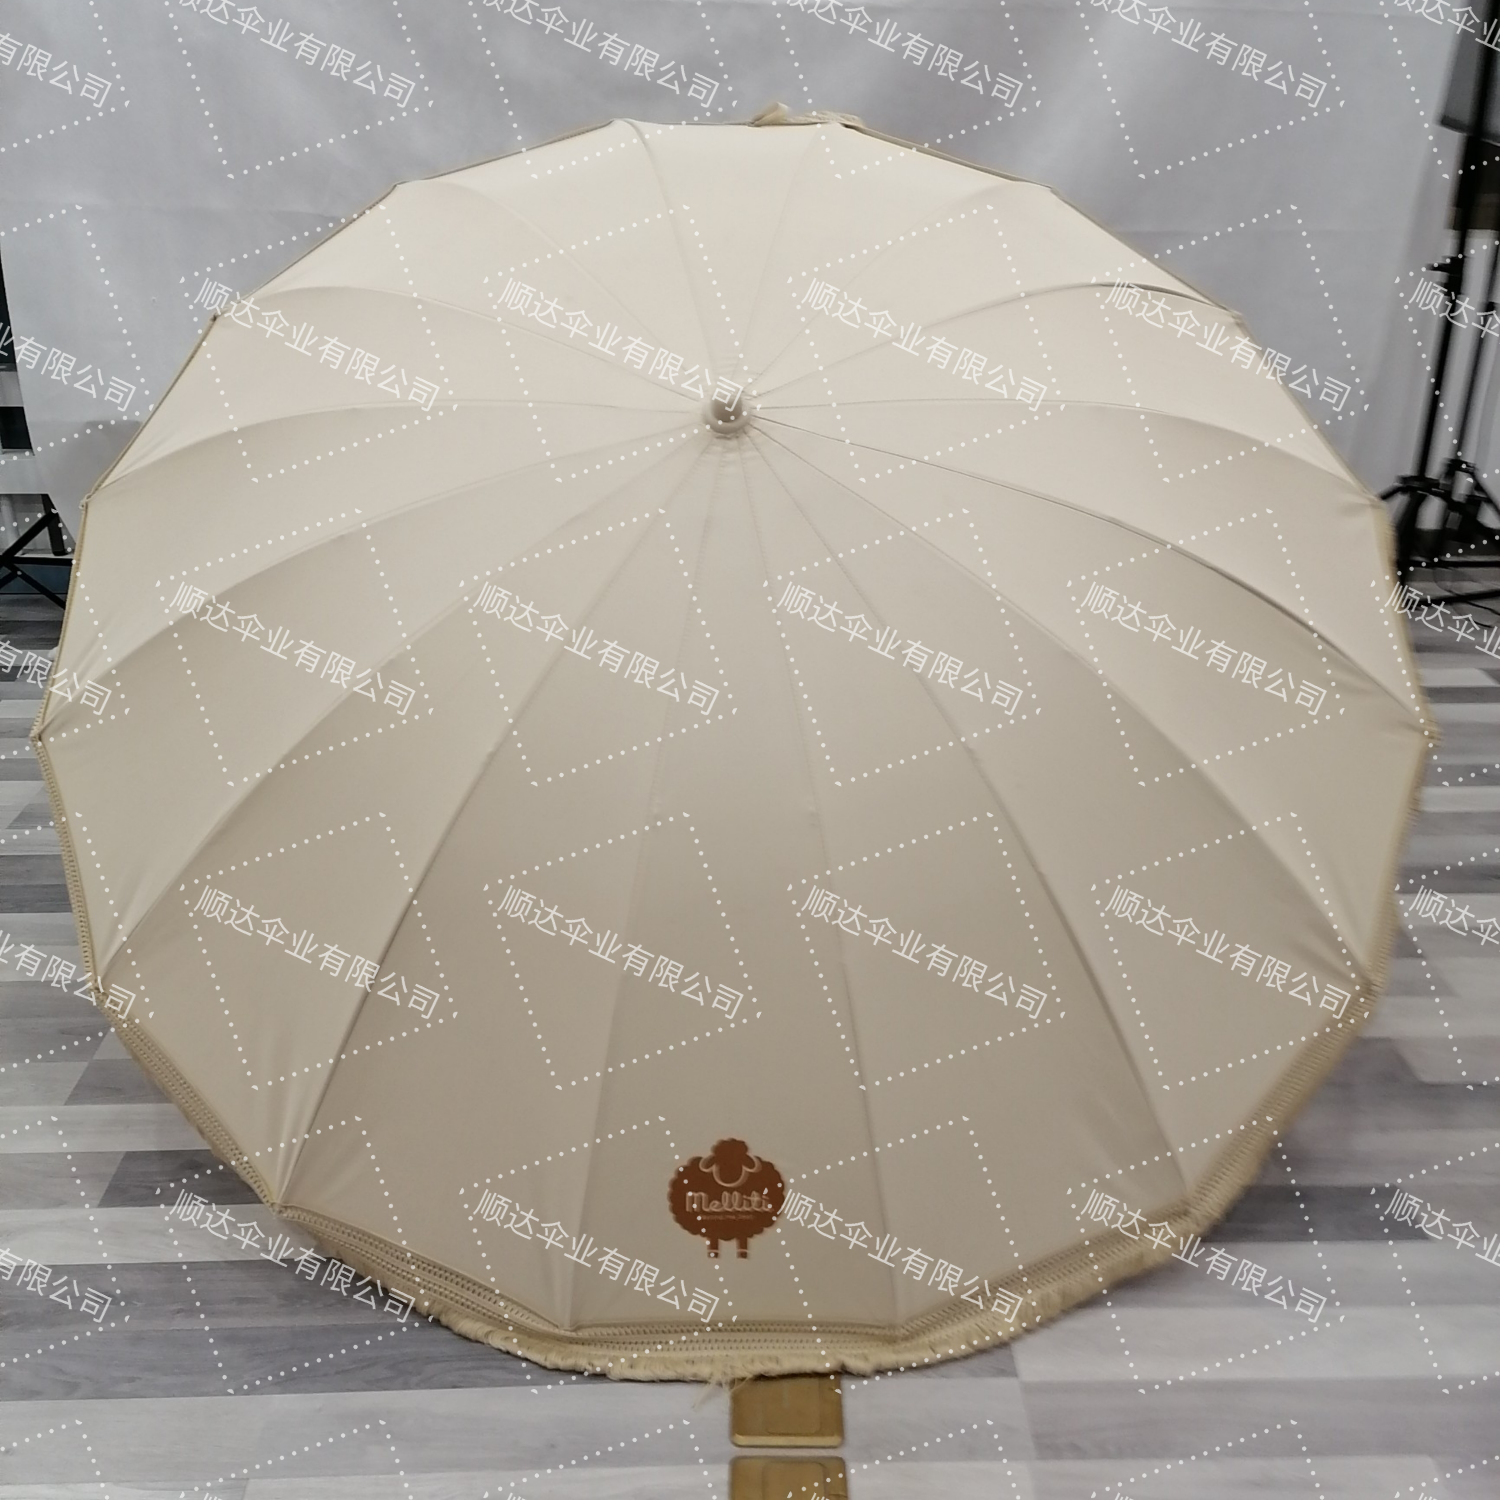 SDumbrella厂家供应户外16骨涤纶须边伞  遮阳户外伞 可印刷logo 定制广告遮阳伞